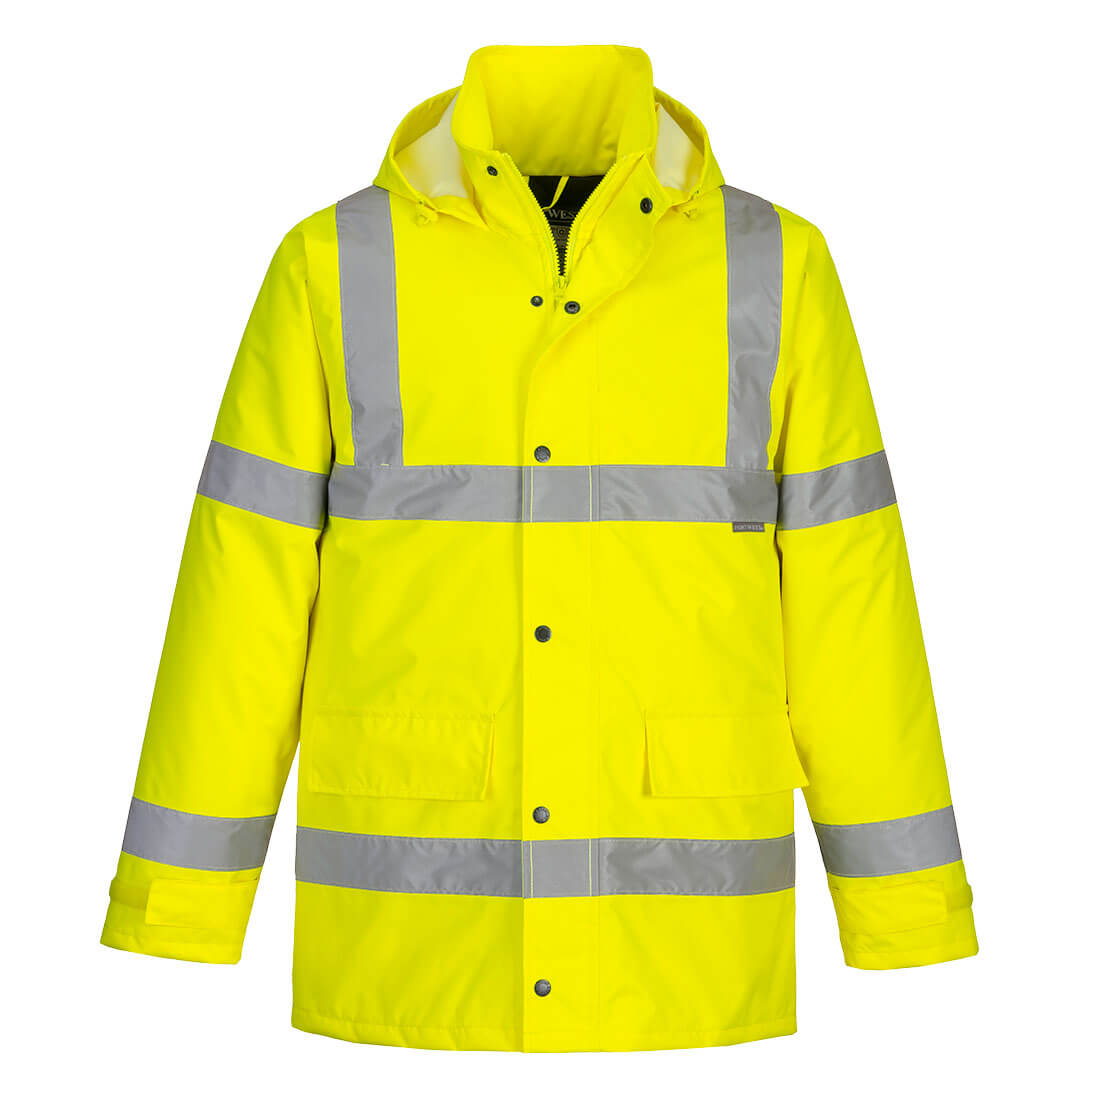 Portwest S460 - Yellow Large Hi-Vis Traffic Jacket Coat Reflective Visibility